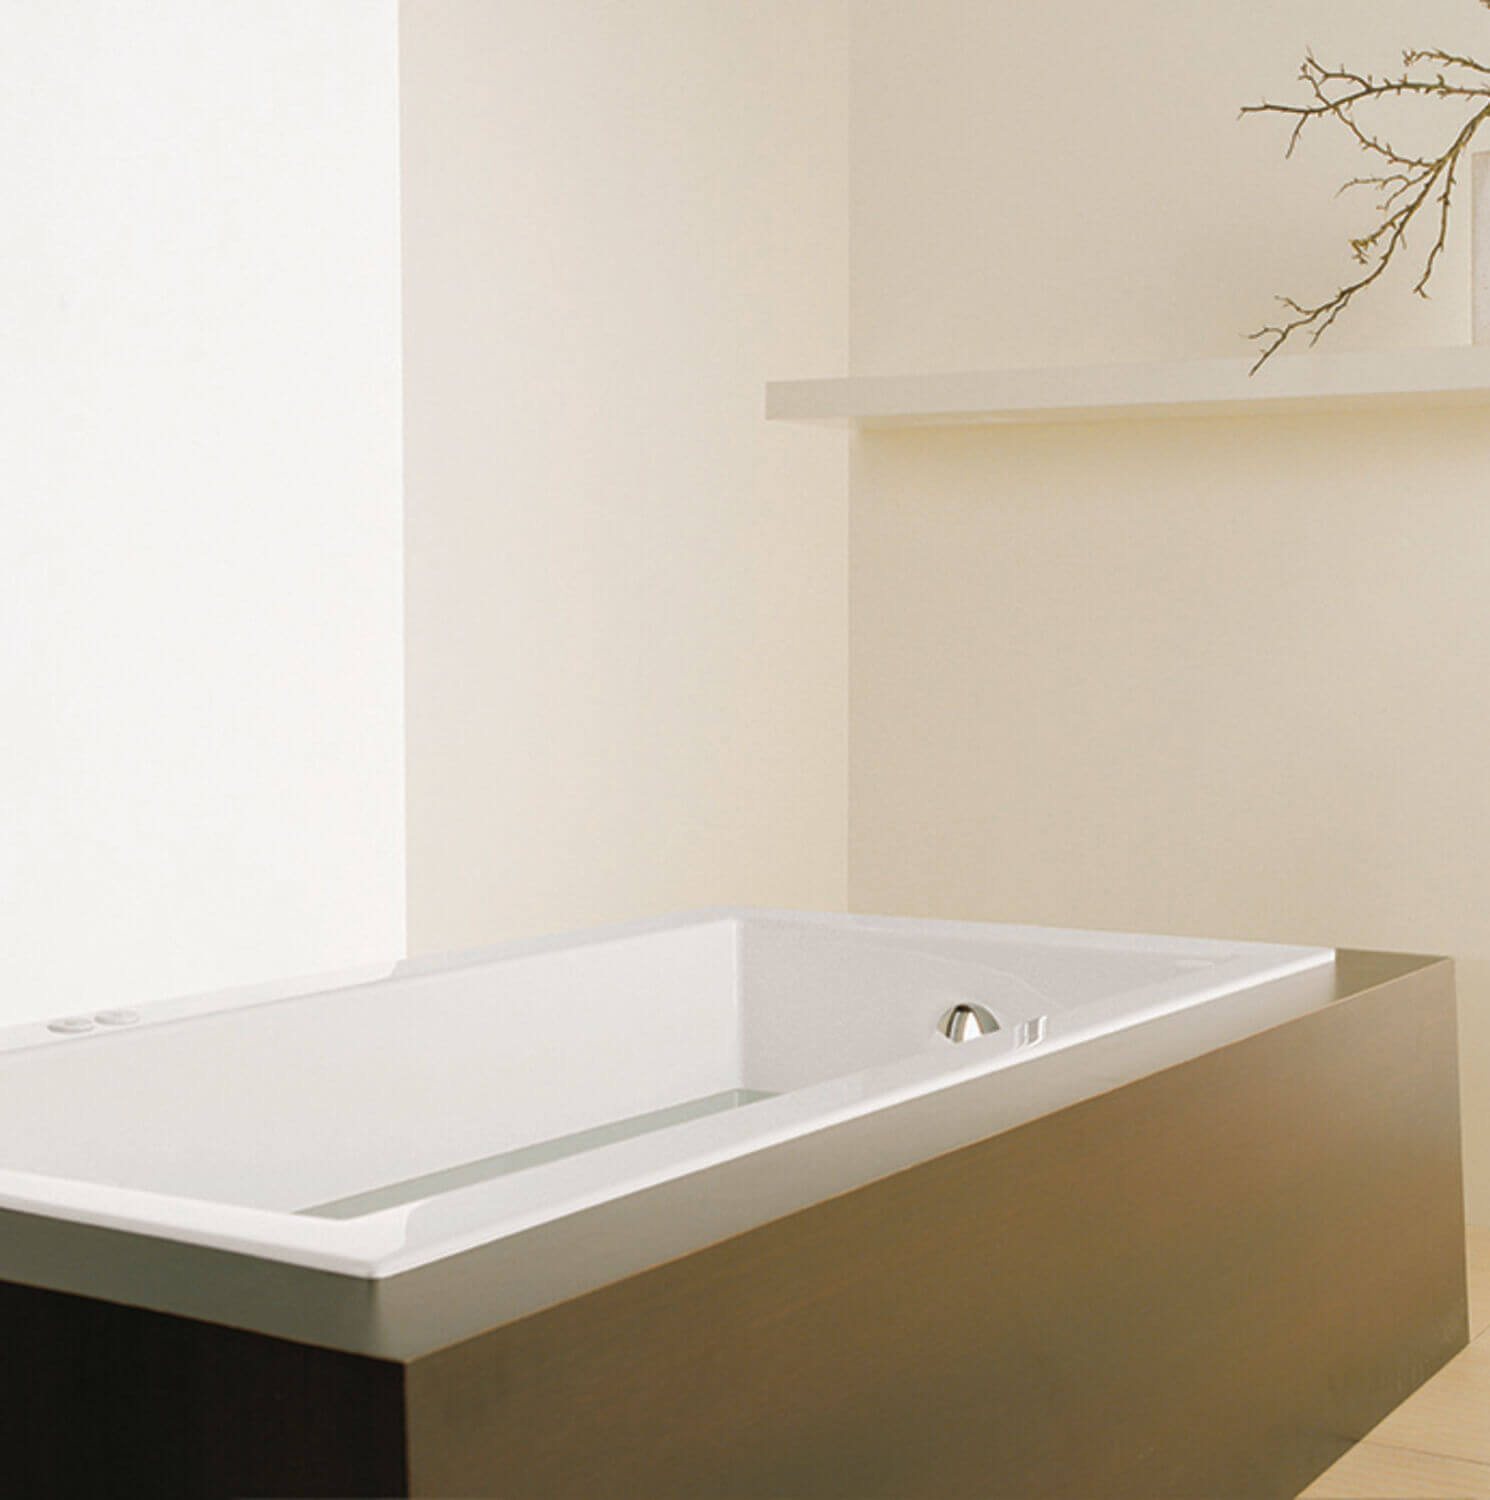 Bainultra Origami® 6636 Original Series alcove drop-in air jet bathtub for your modern bathroom